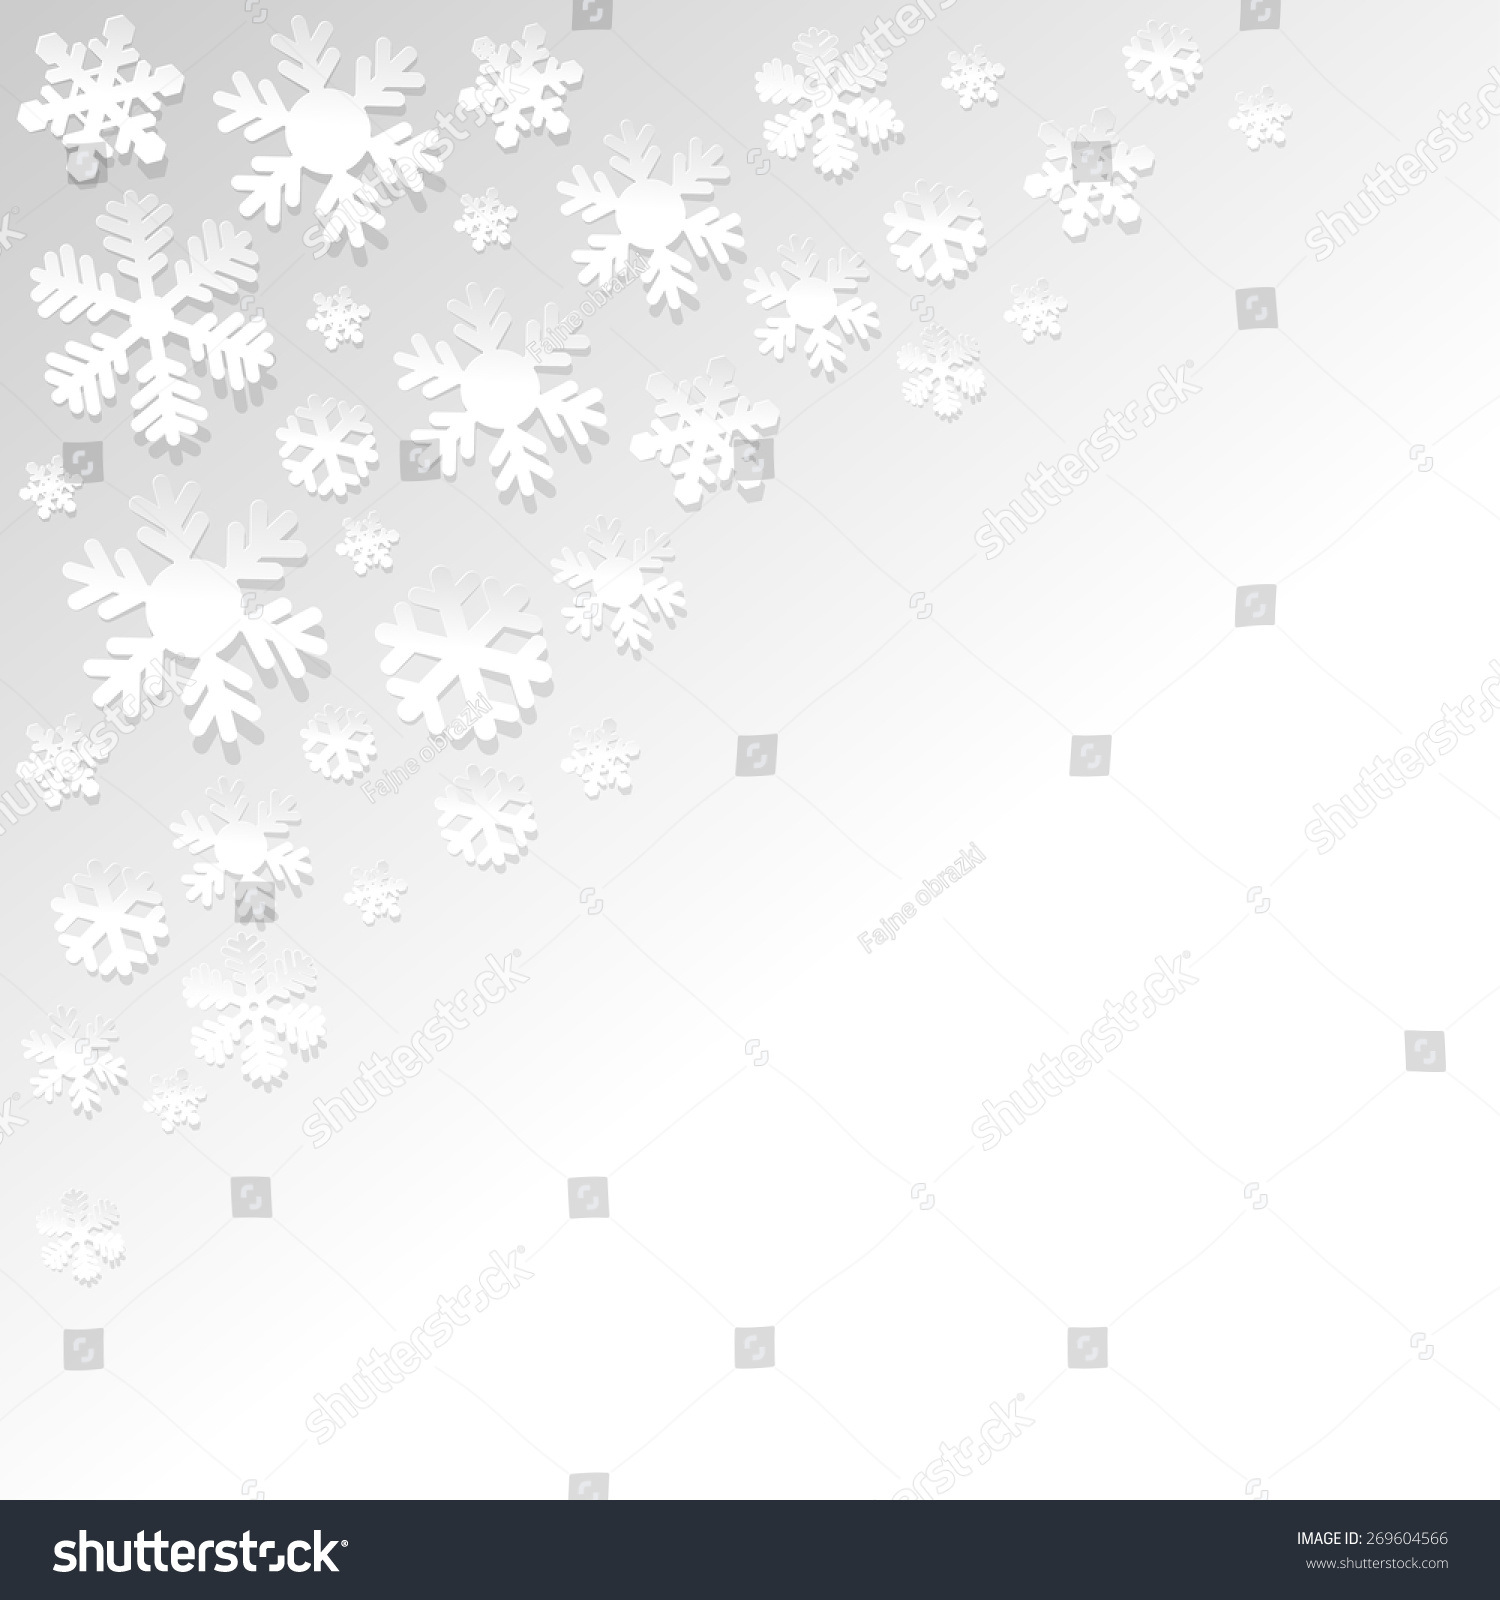 Snowflakes background white paper #269604566